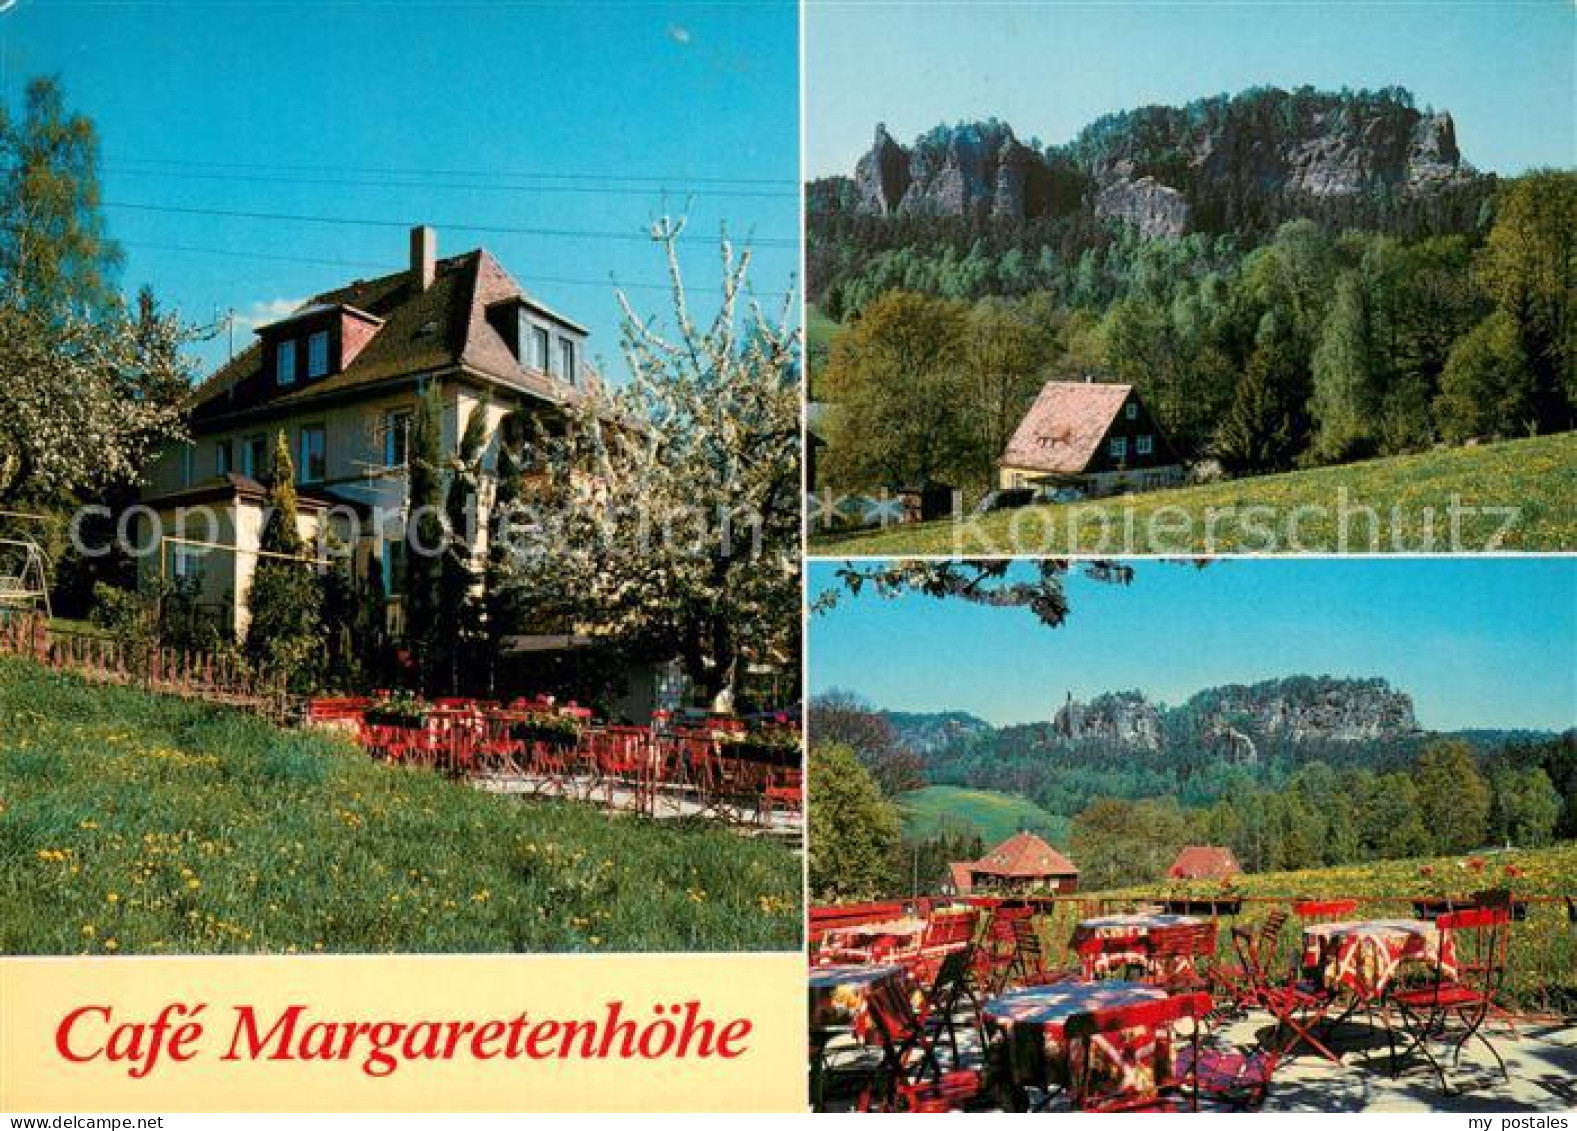 73742401 Rathen Saechsische Schweiz Cafe Margaretenhoehe Terrasse Panorama Rathe - Rathen